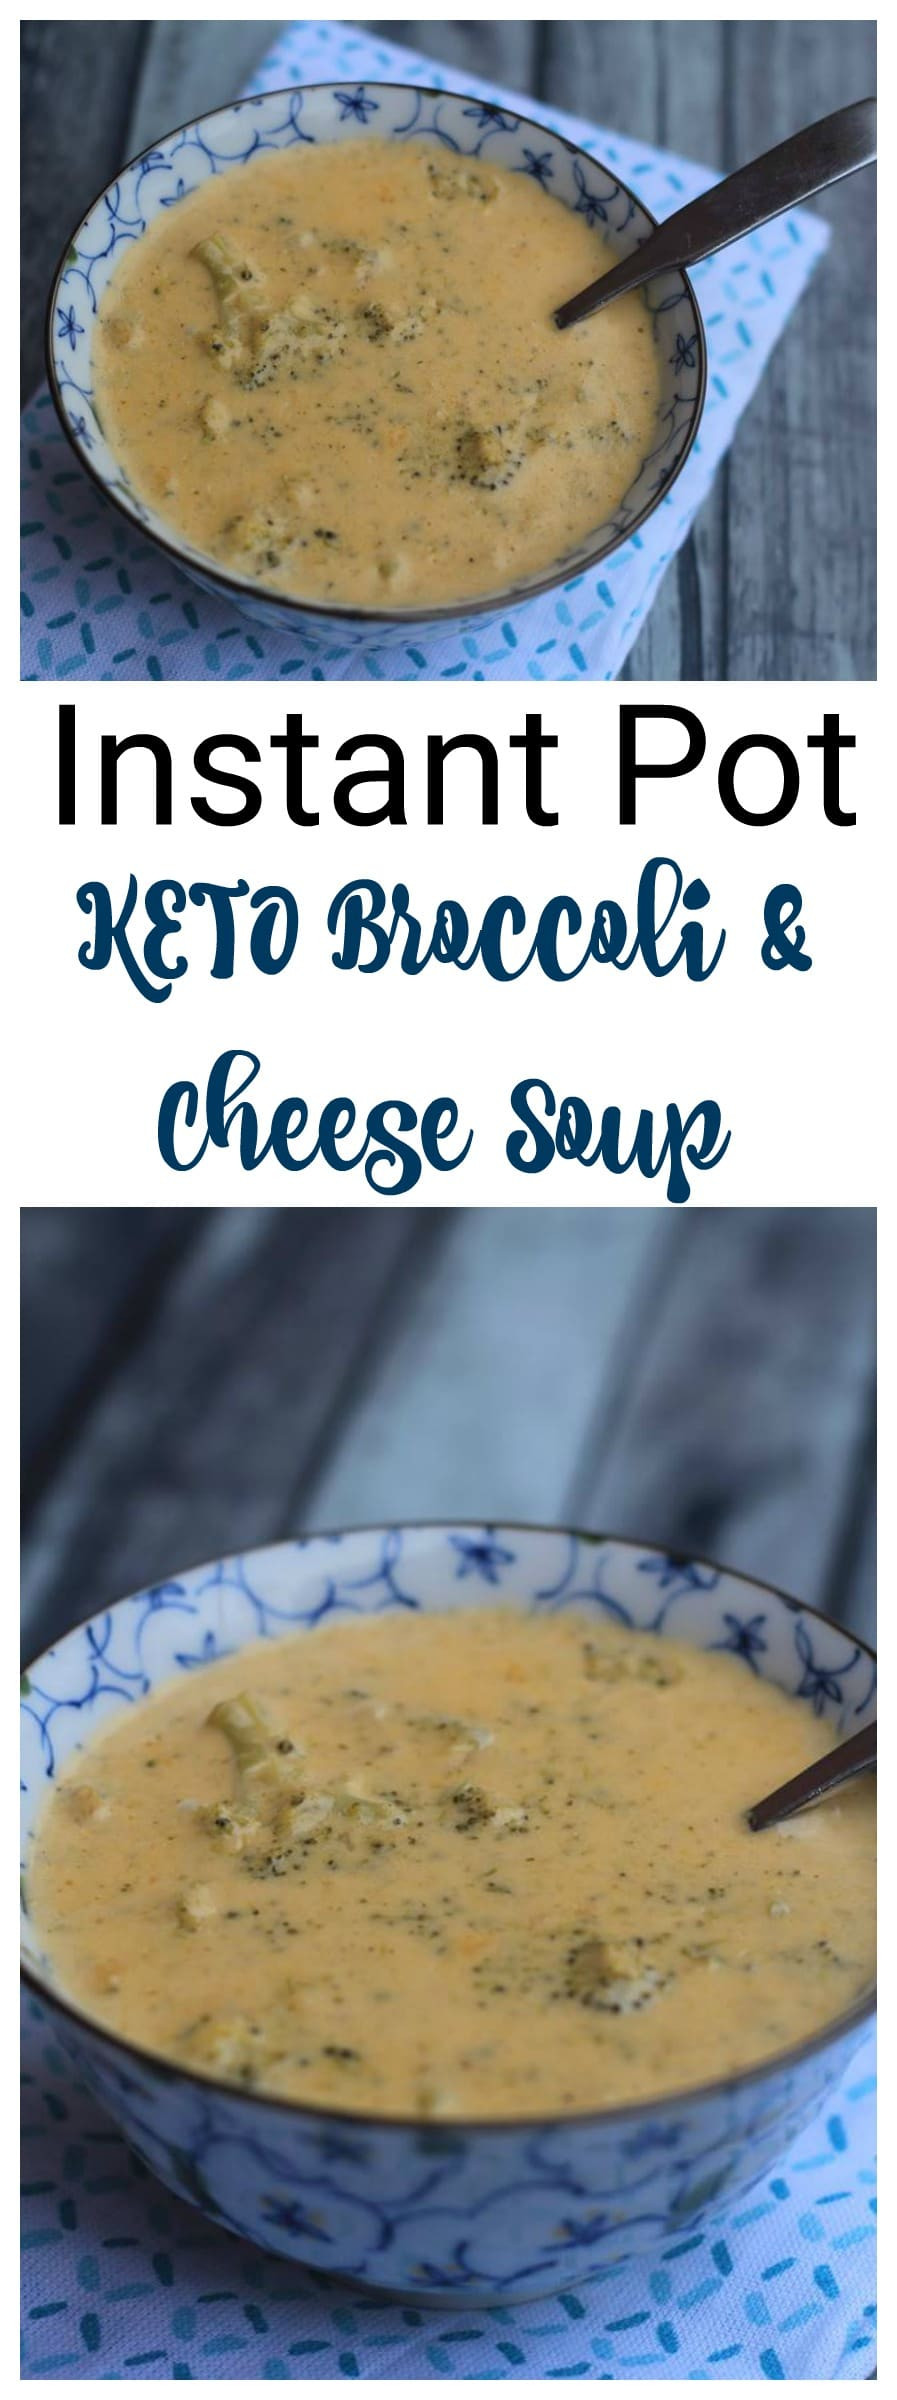 Instant Pot Keto Soup Recipes
 Instant Pot Broccoli & Cheese Soup Recipe Keto Low Carb